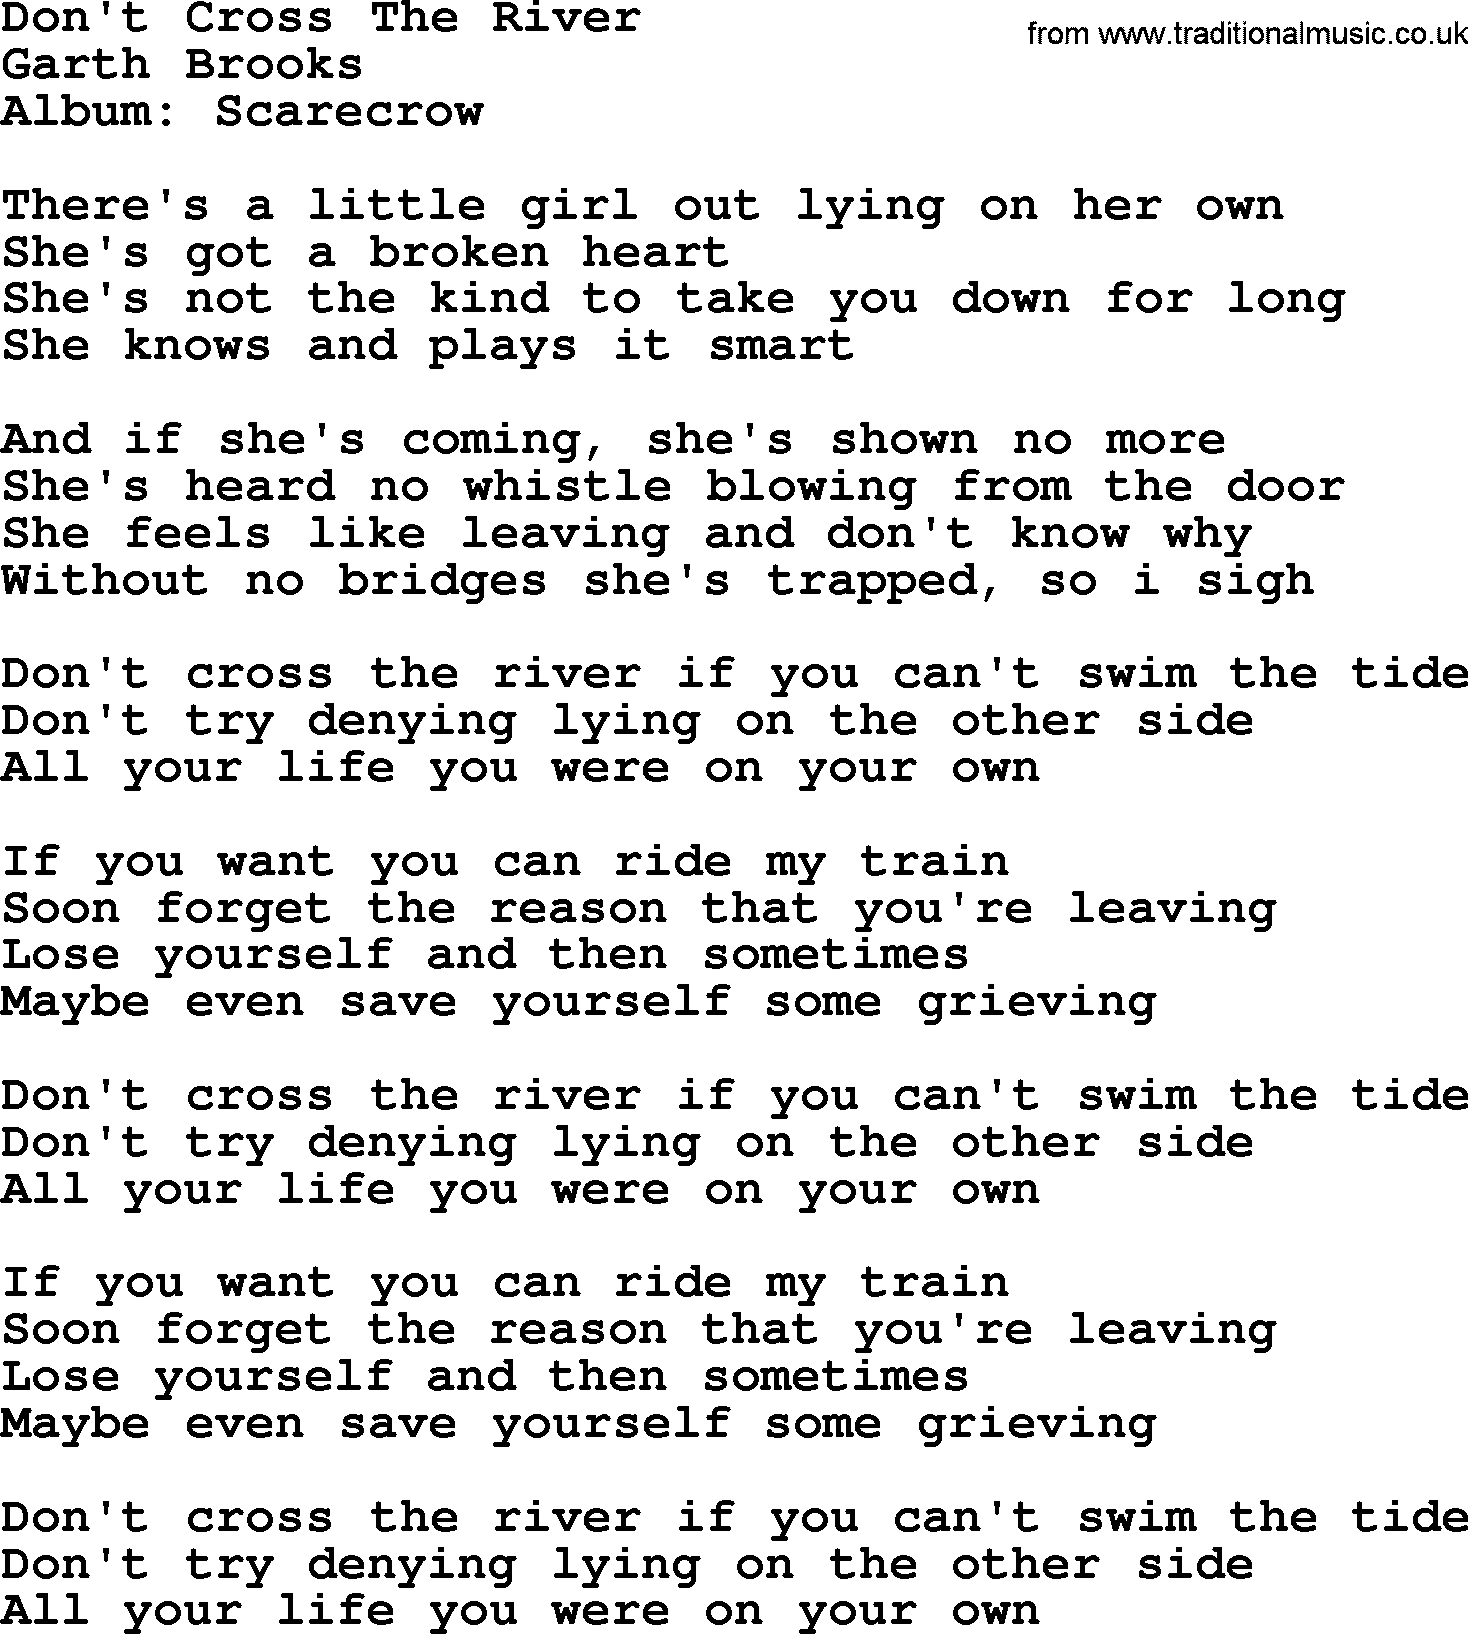 Garth Brooks song: Don't Cross The River, lyrics